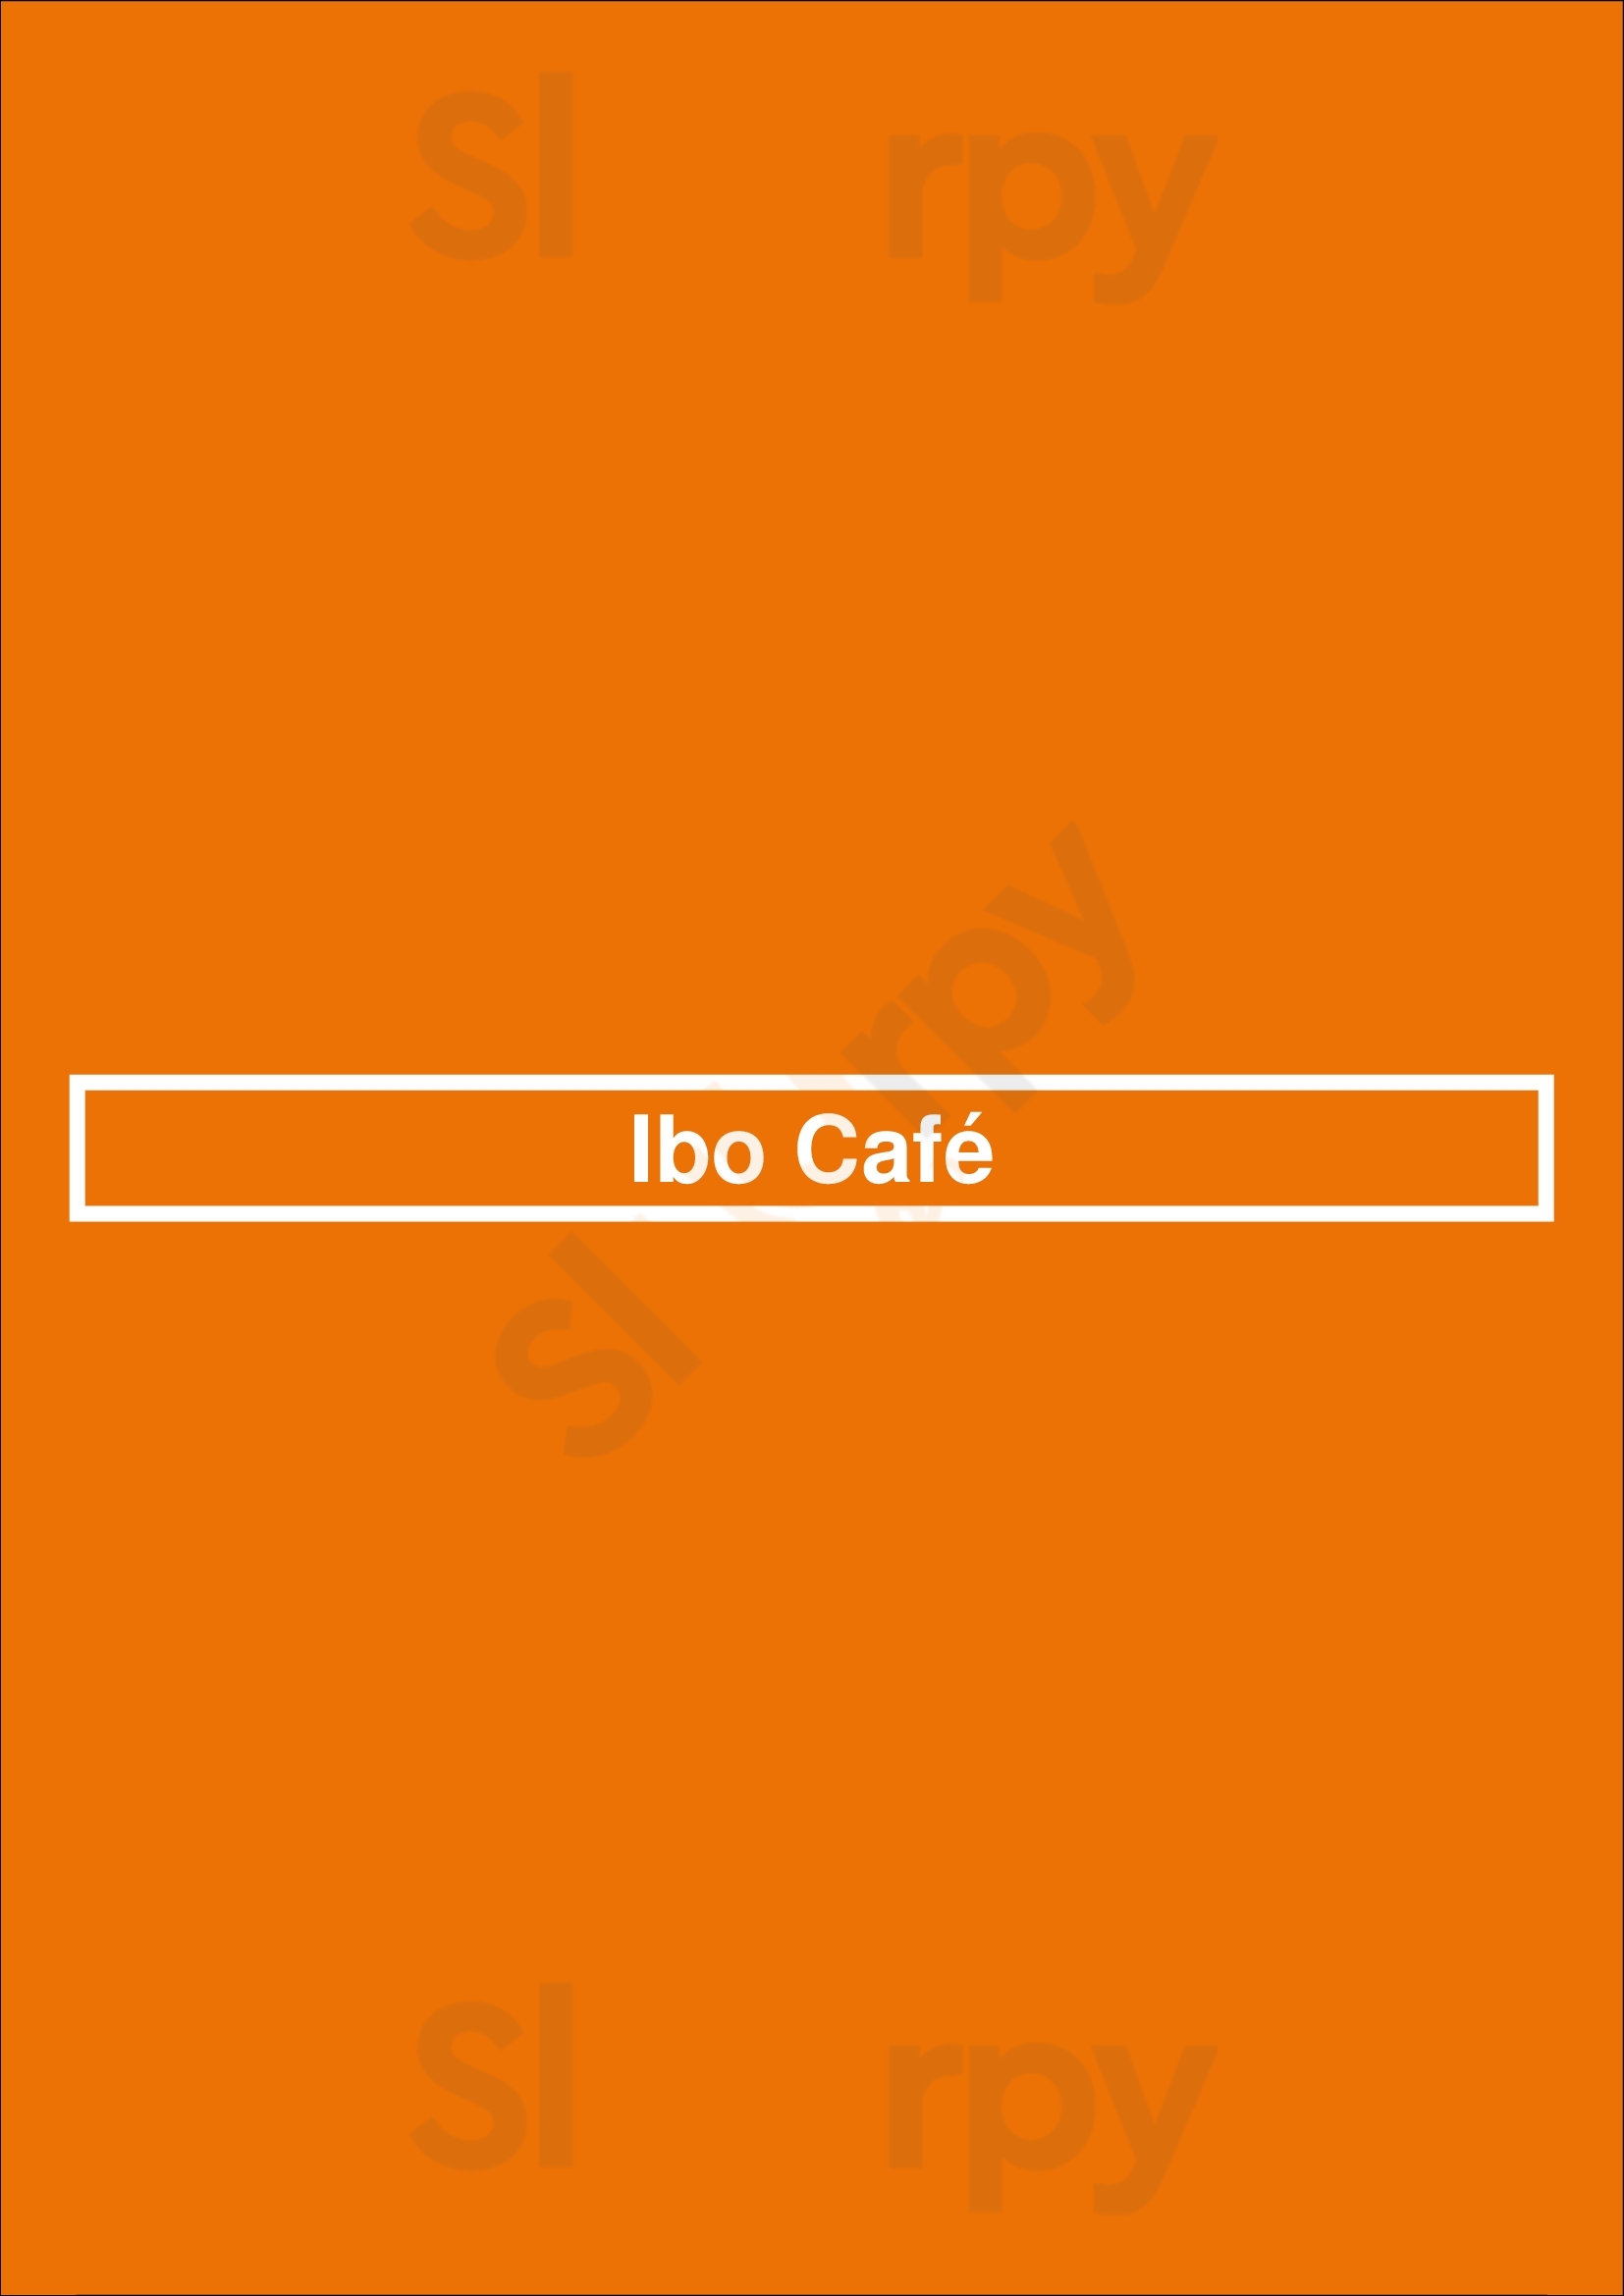 Ibo Café Lisboa Menu - 1